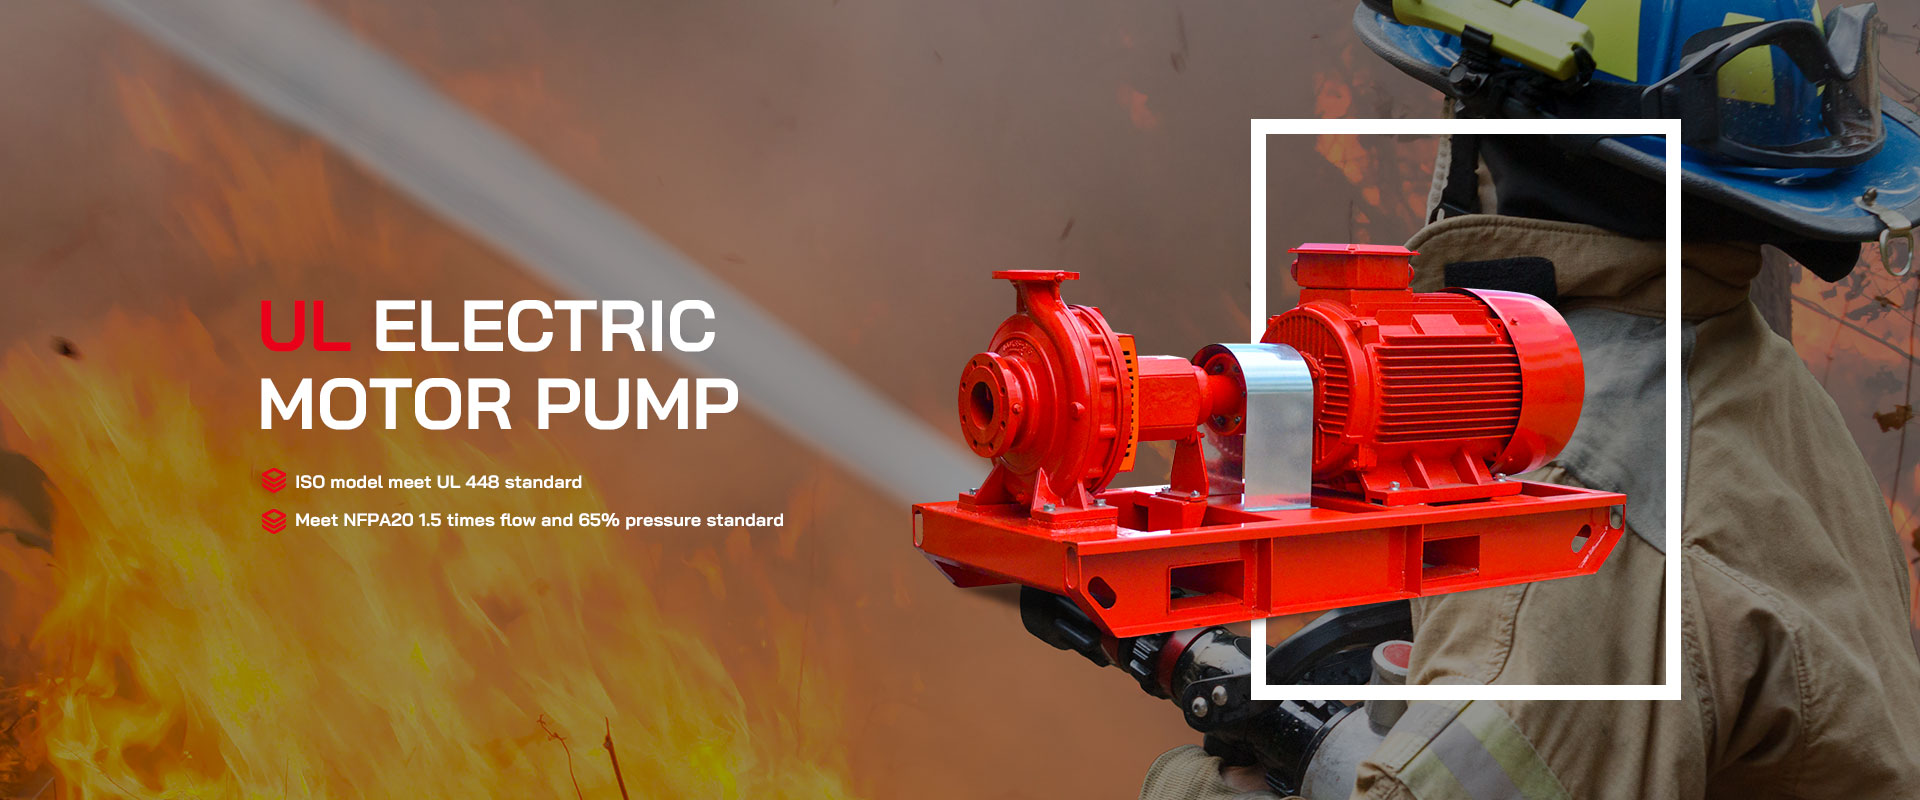 UL-Electric--motor-pump